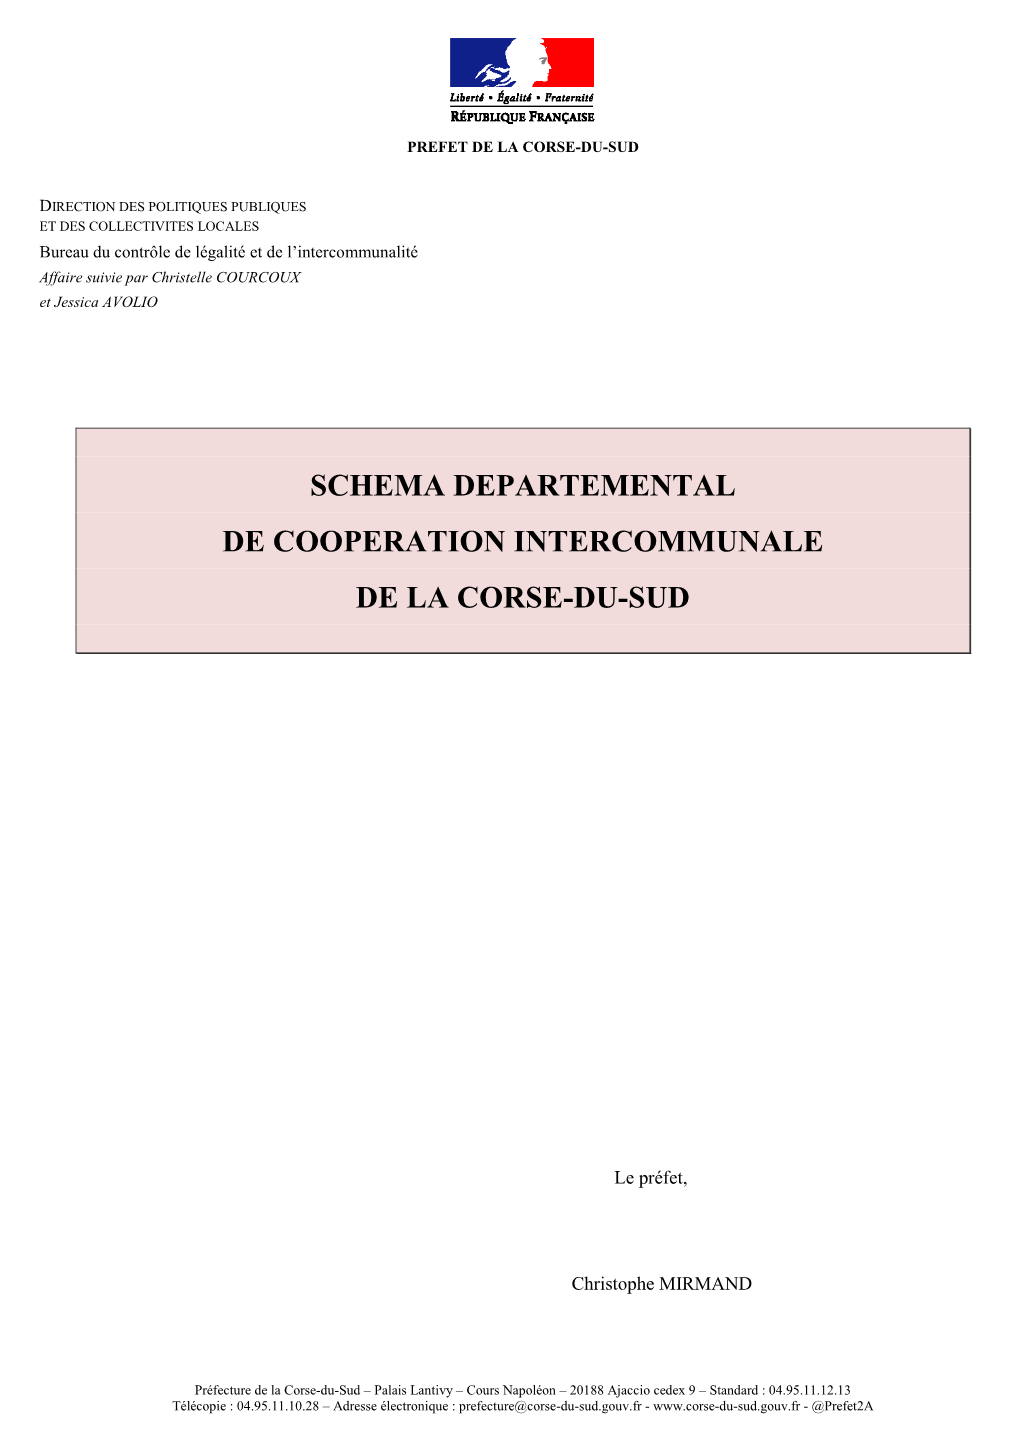 Schema Departemental De Cooperation Intercommunale De La Corse-Du-Sud